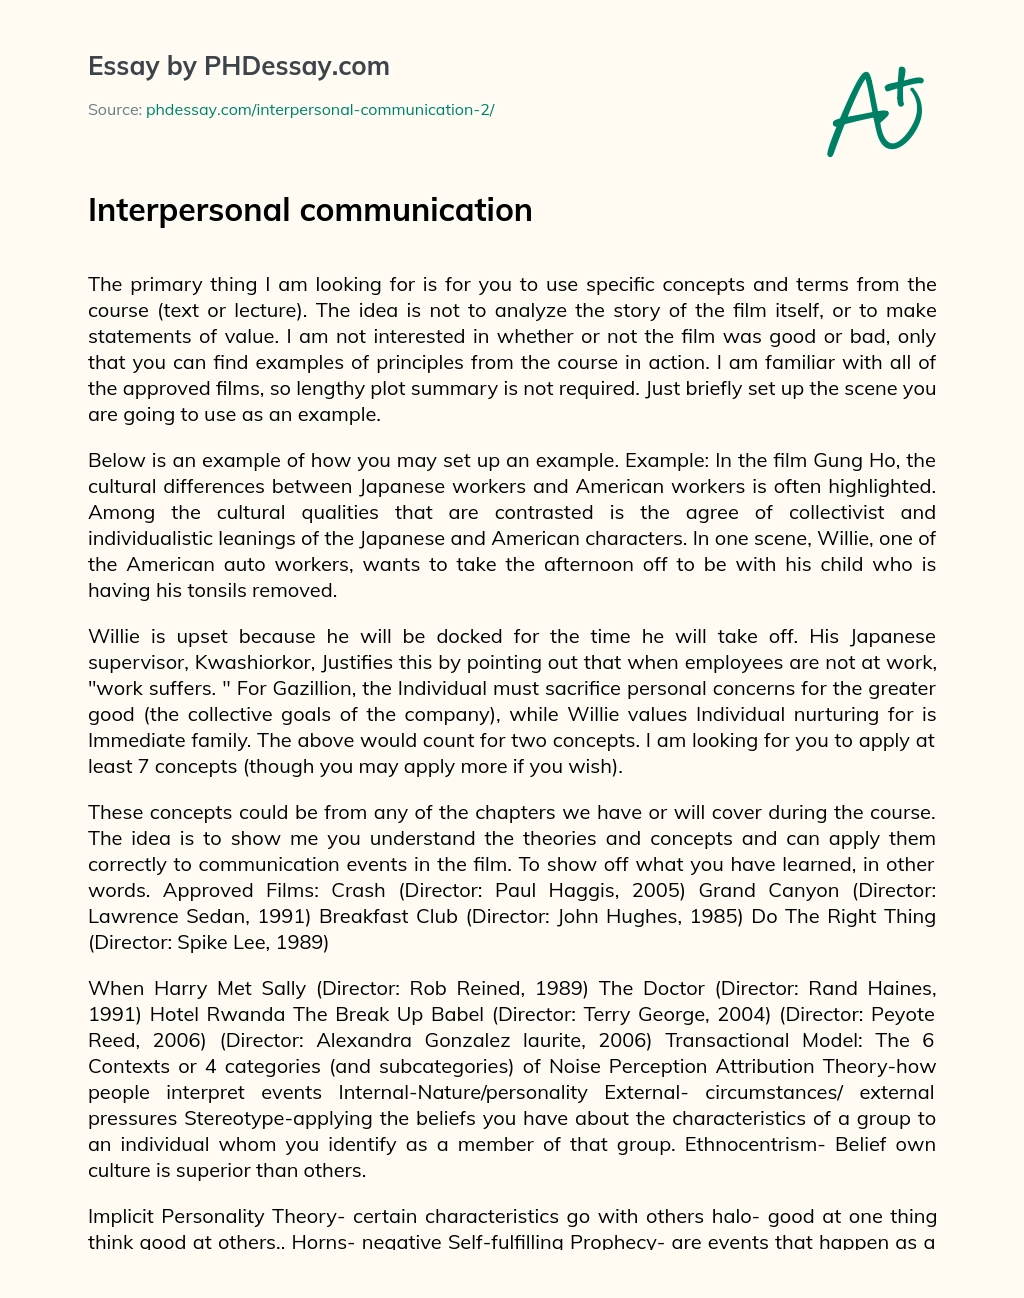 Interpersonal communication essay